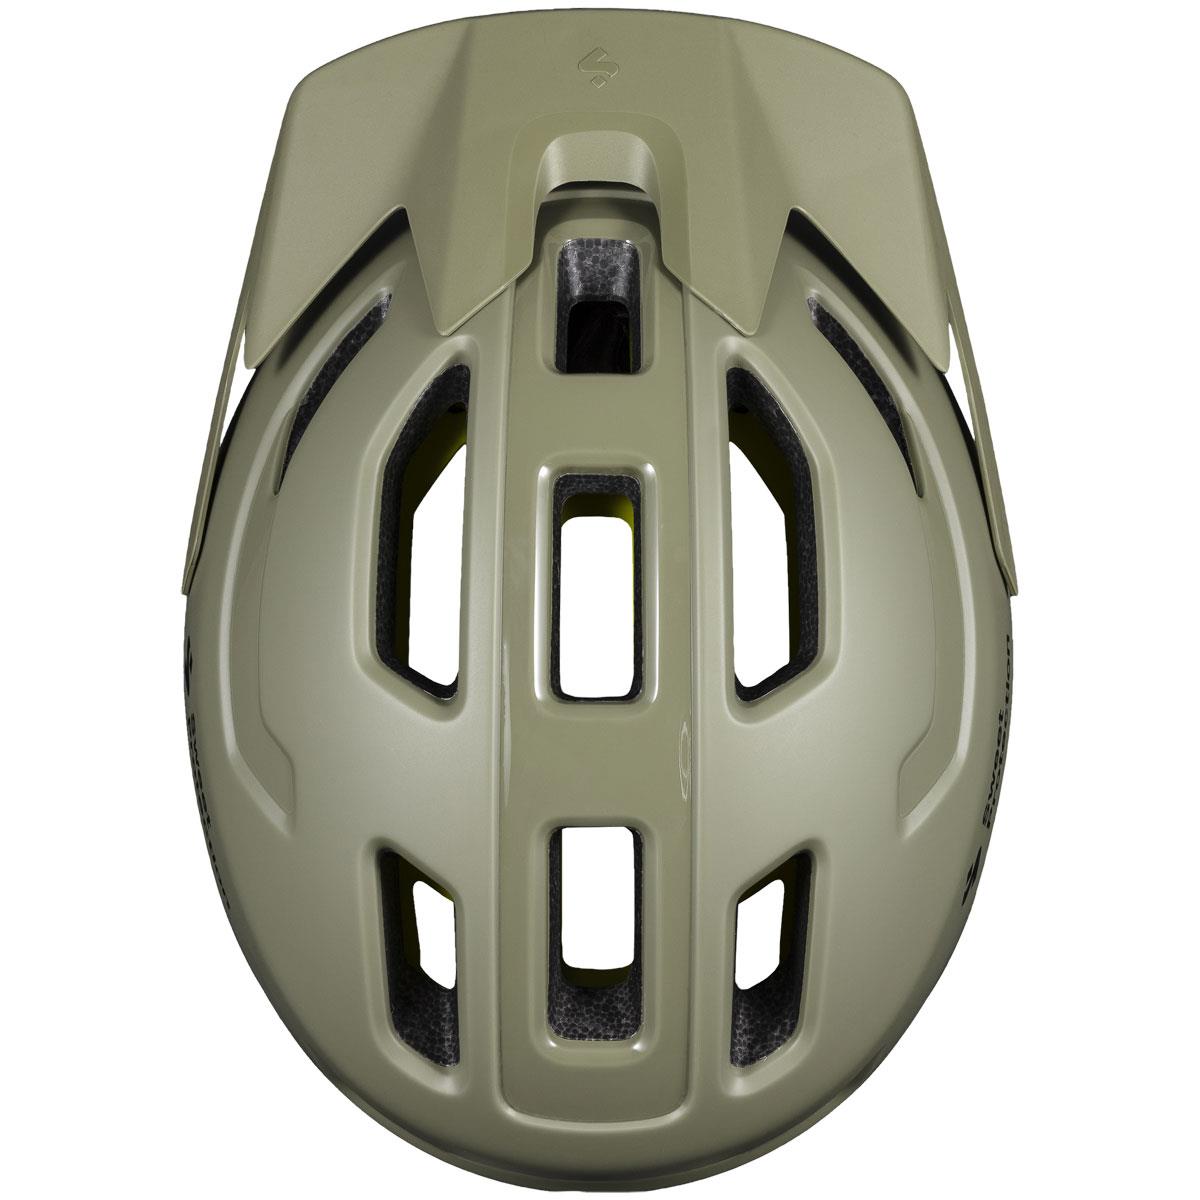 Sweet Protection Ripper Helmet JR - Casque VTT enfant